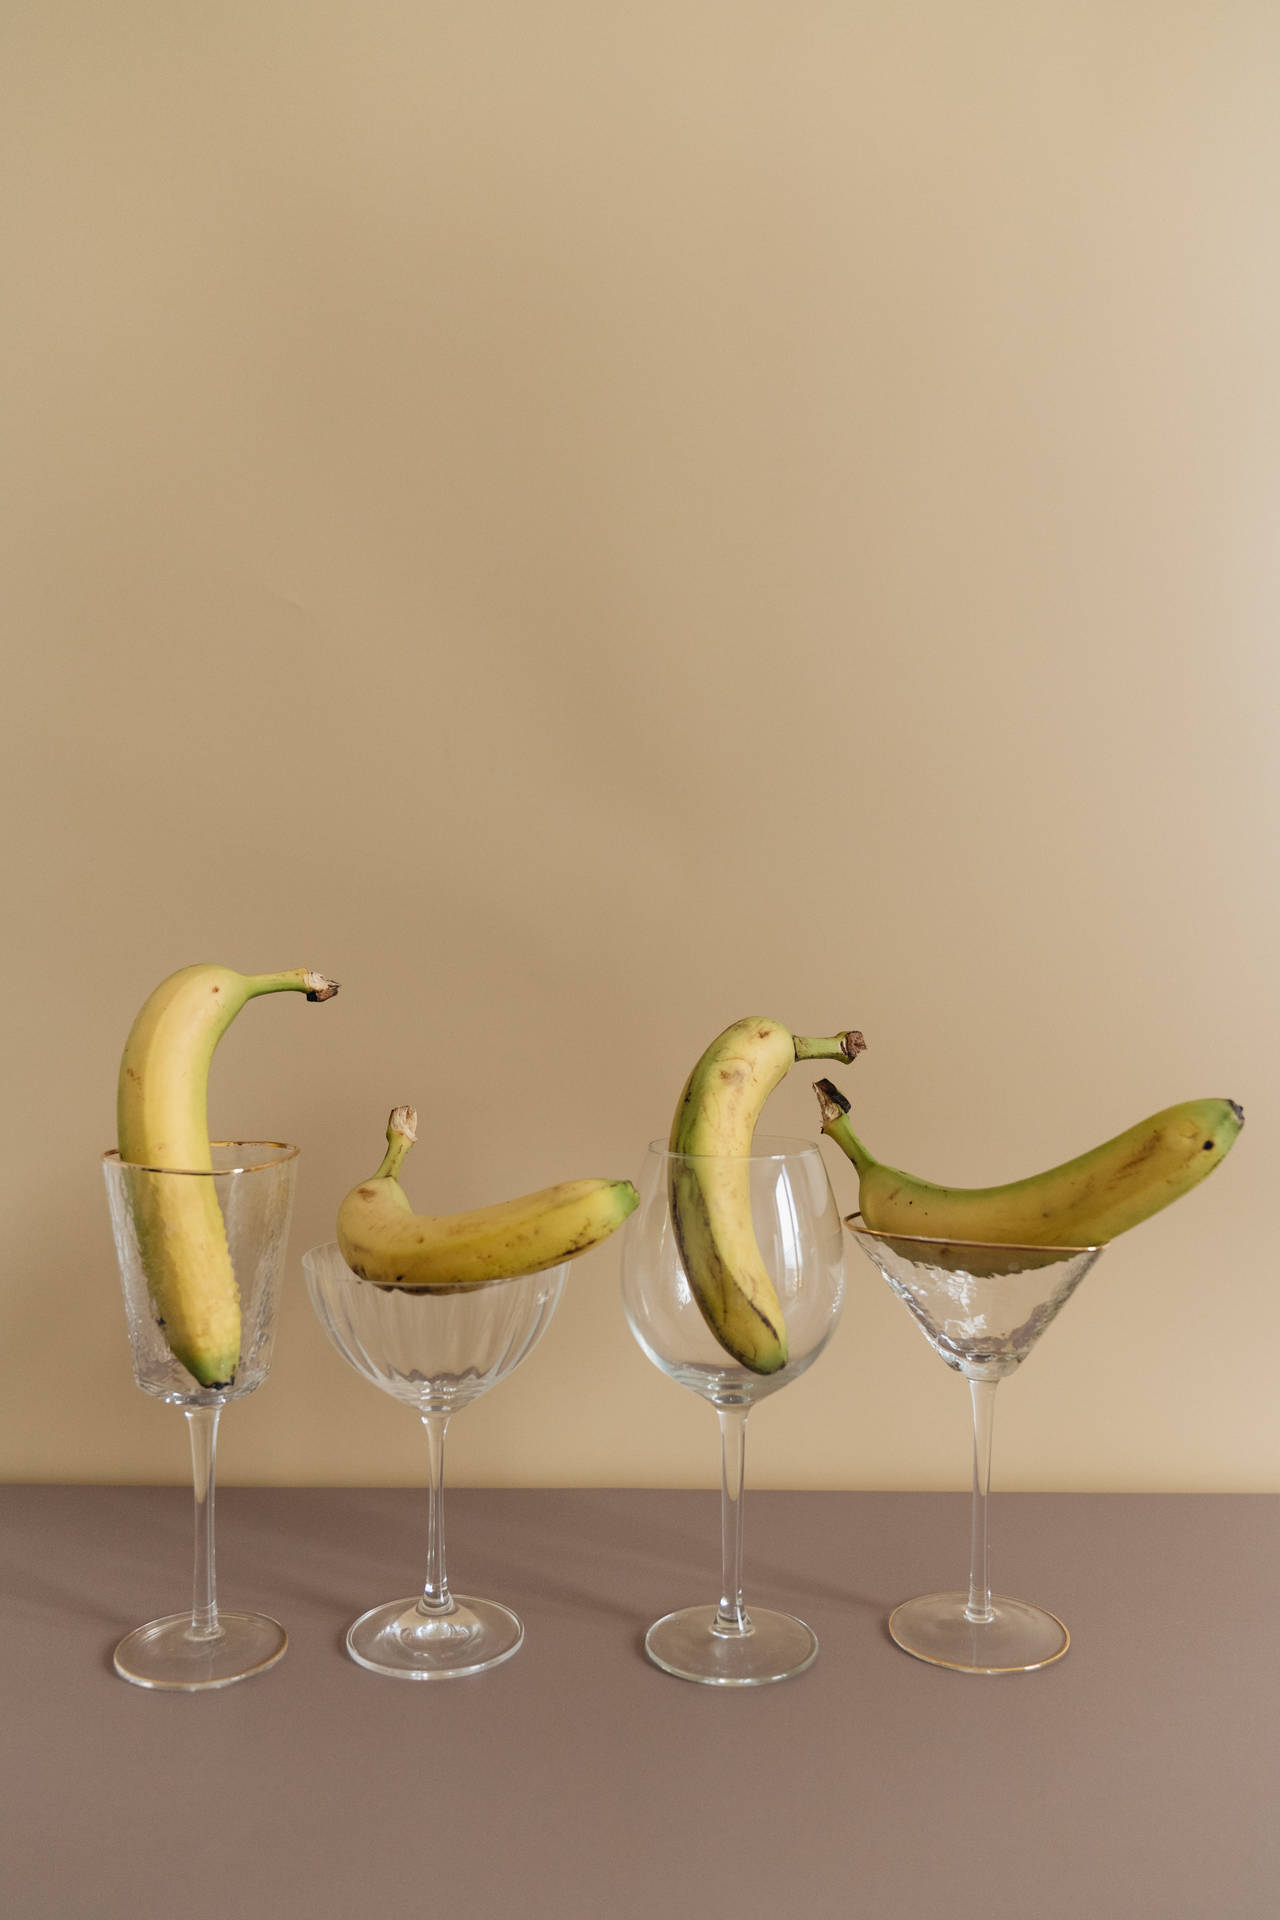 Bananas In Wine Glasses Background